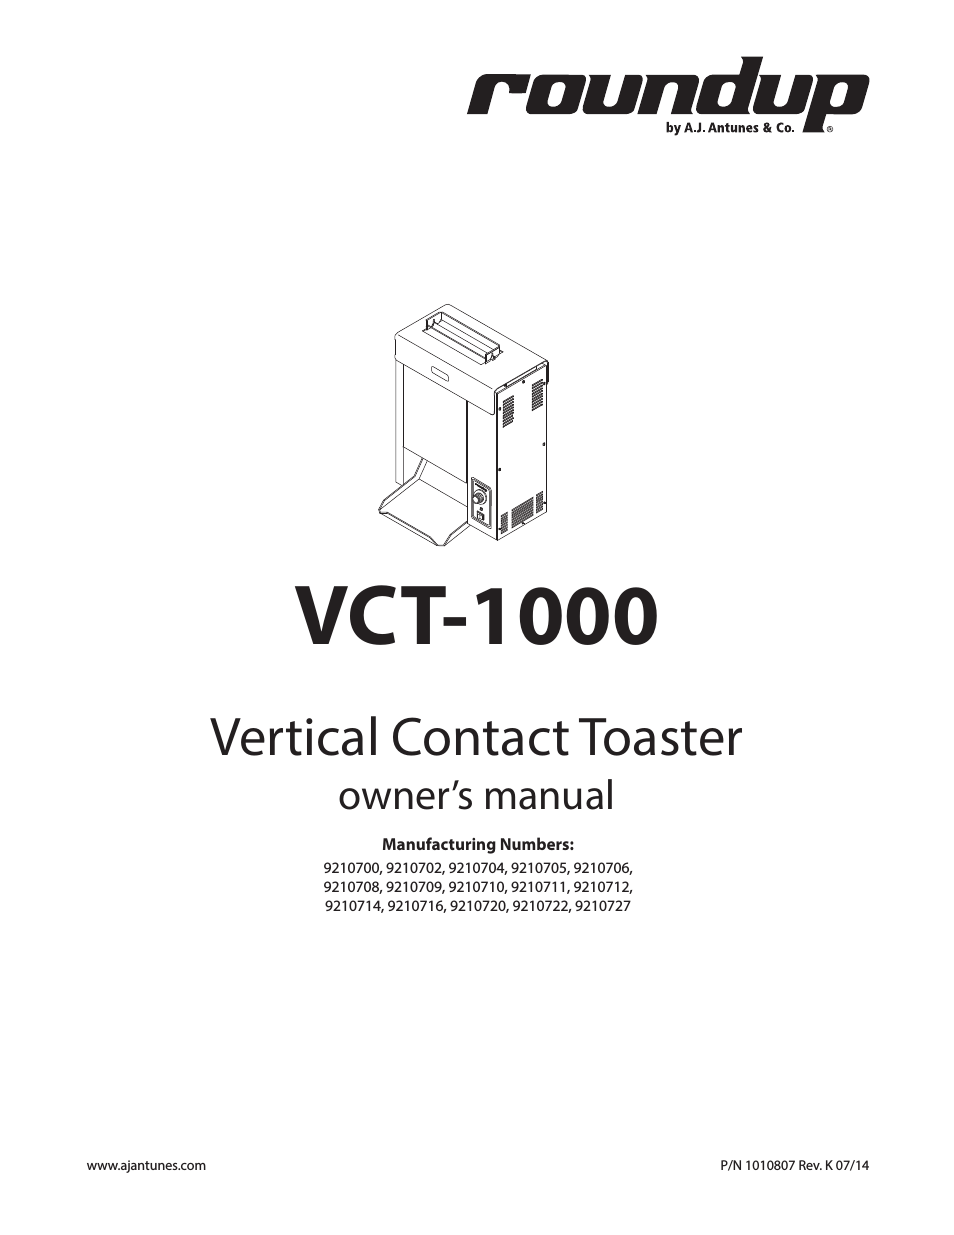 VCT-1000 9210727